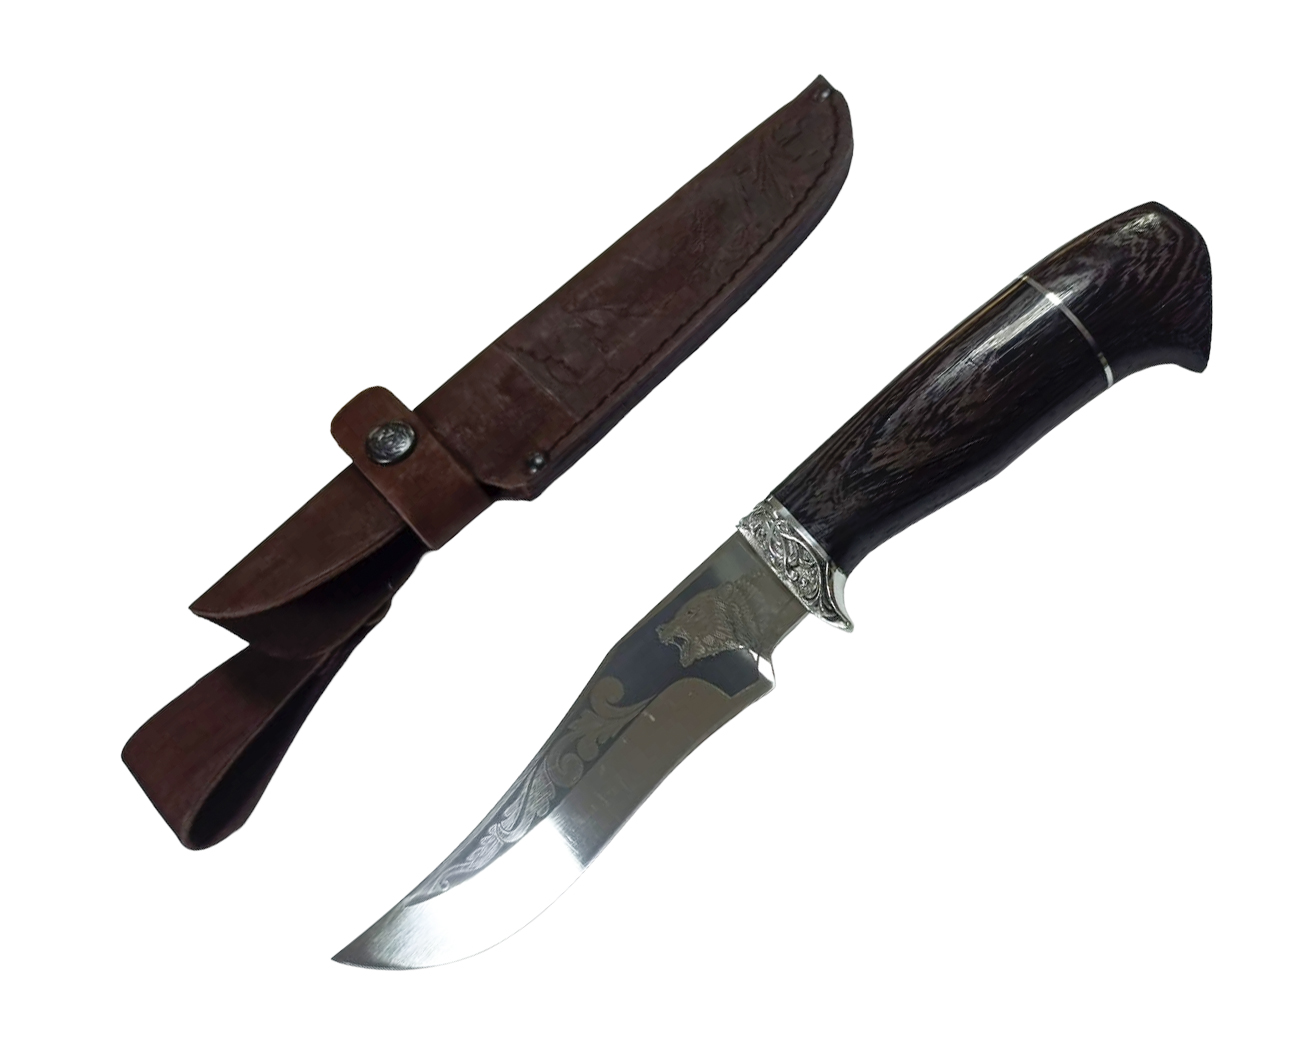 Нож Ладья Охотник-1 НТ-3 P 65х13 рисунок венге